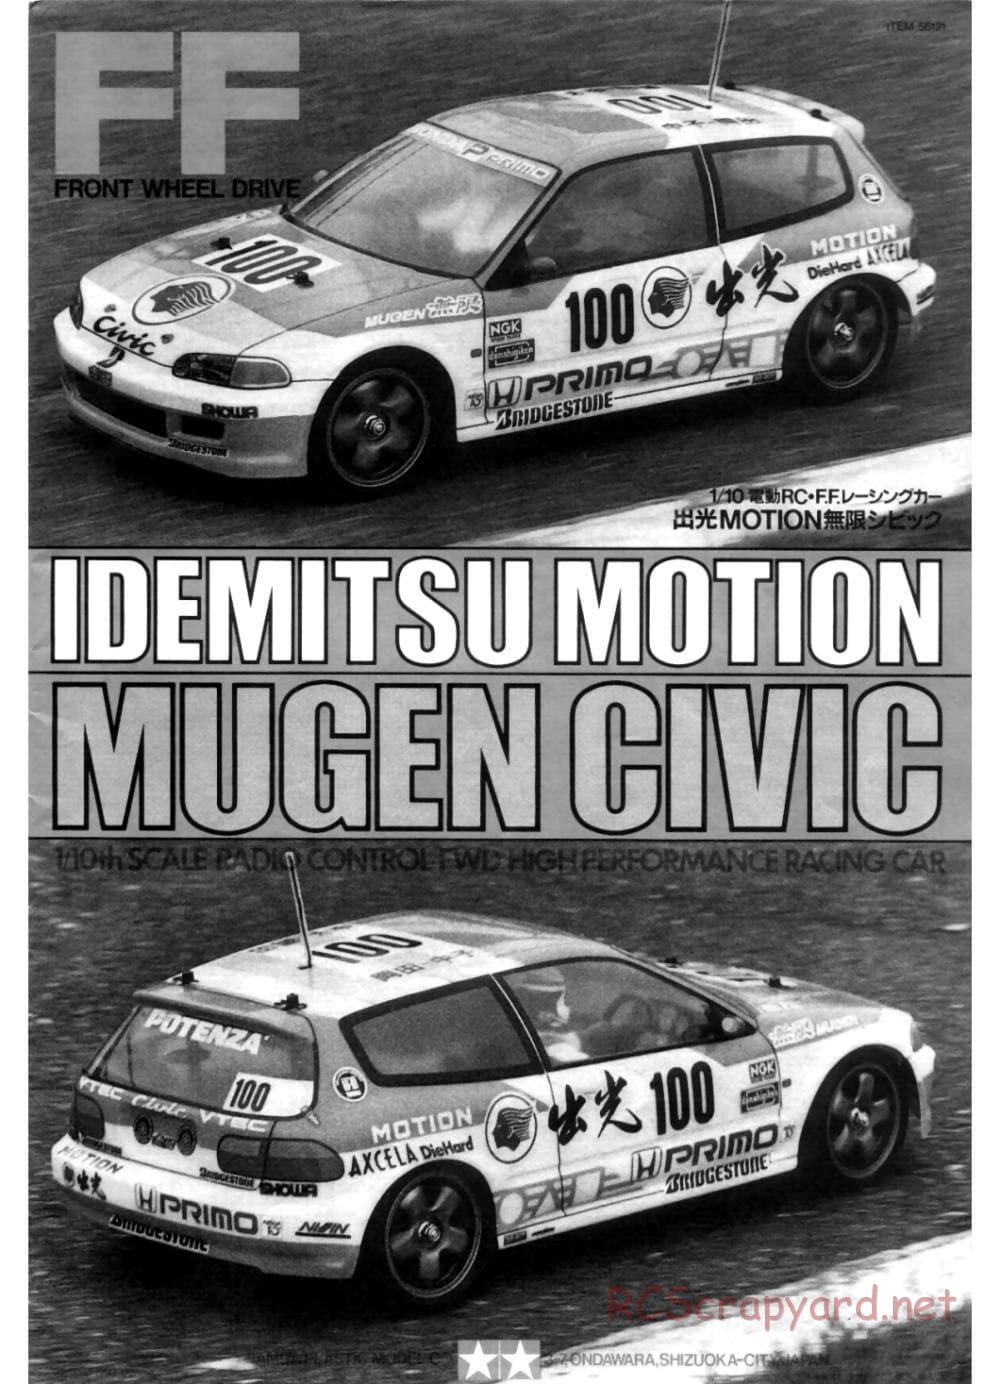 Tamiya - Idemitsu Motion Mugen Civic - FF-01 Chassis - Manual - Page 1